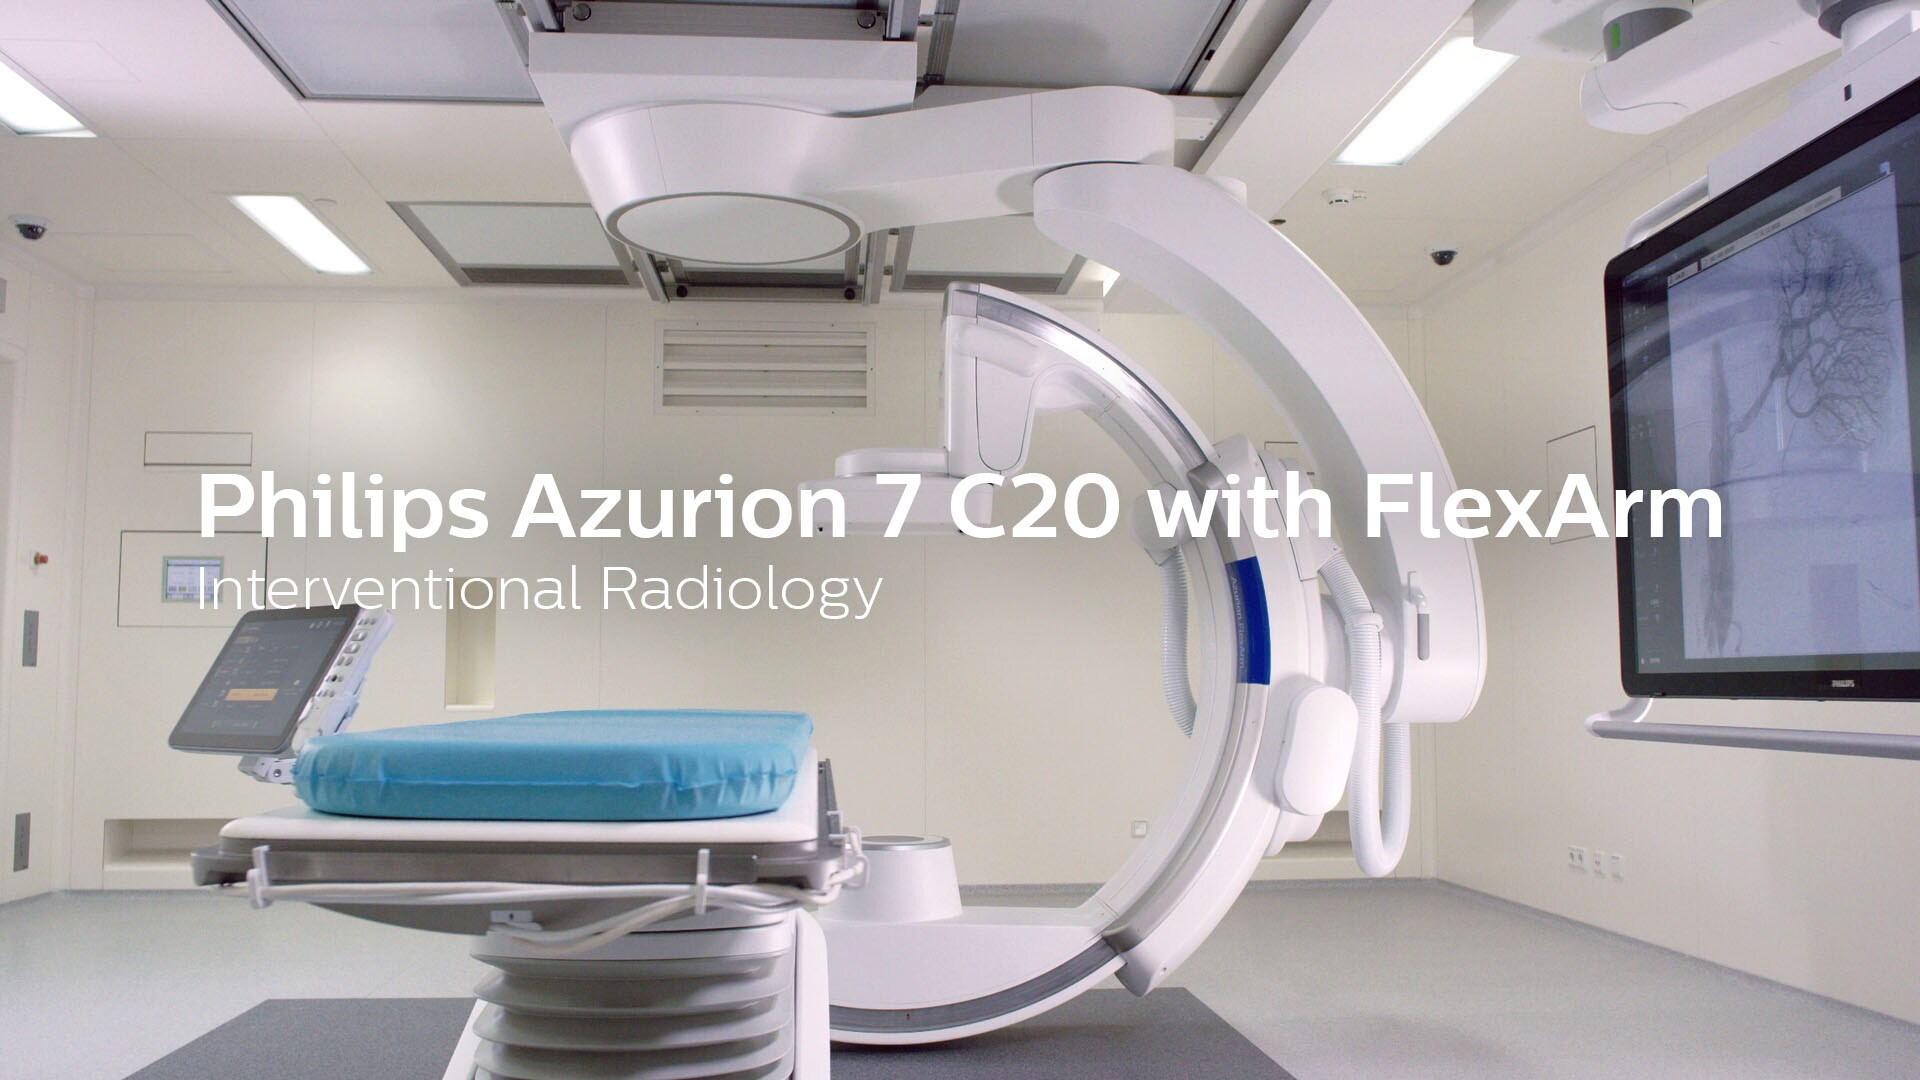 Philips Azurion 7 C20 with Flexarm interventional radiology